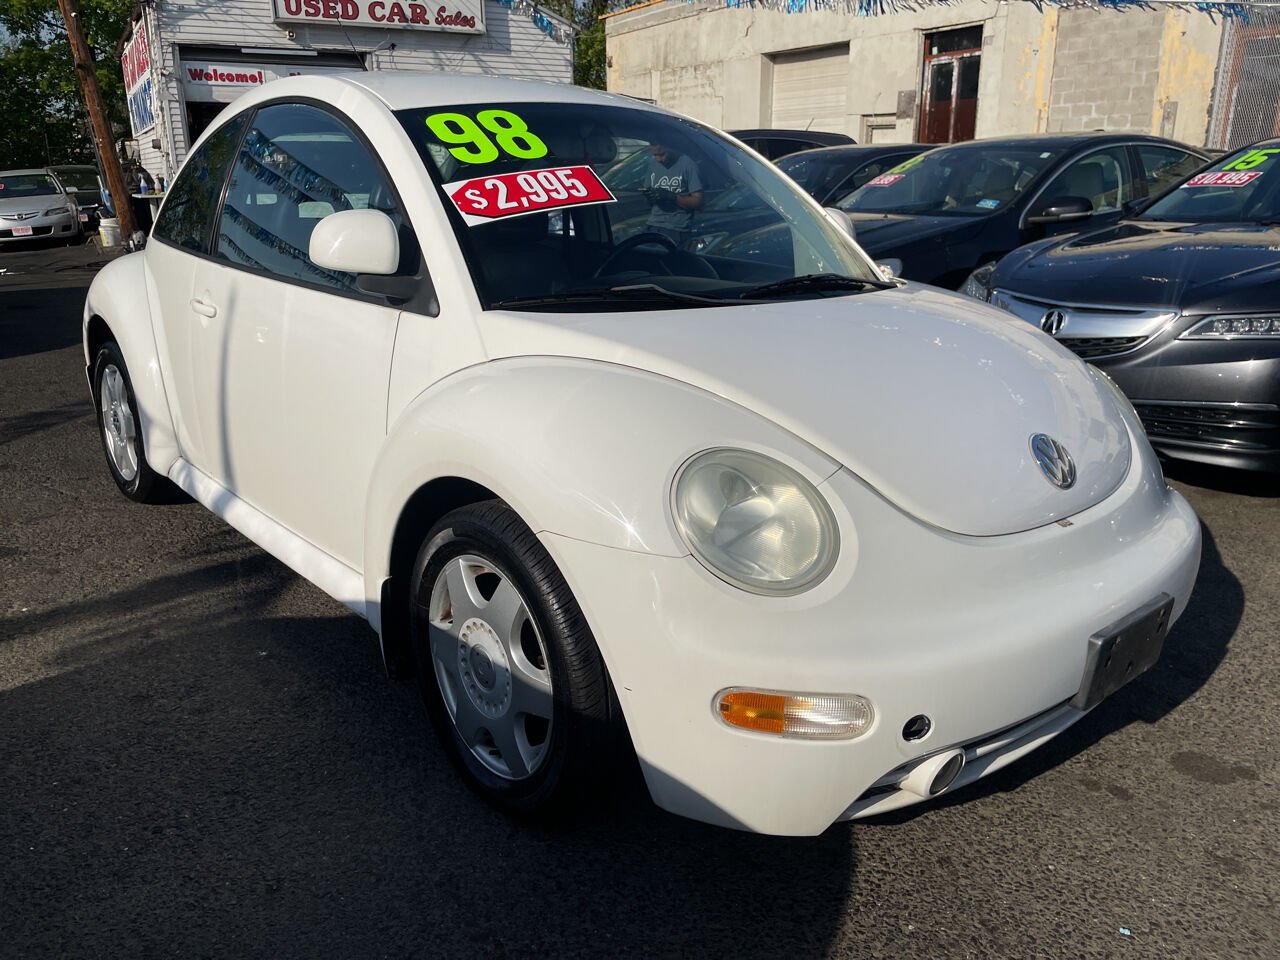 1998 Volkswagen Beetle For Sale - Carsforsale.com®